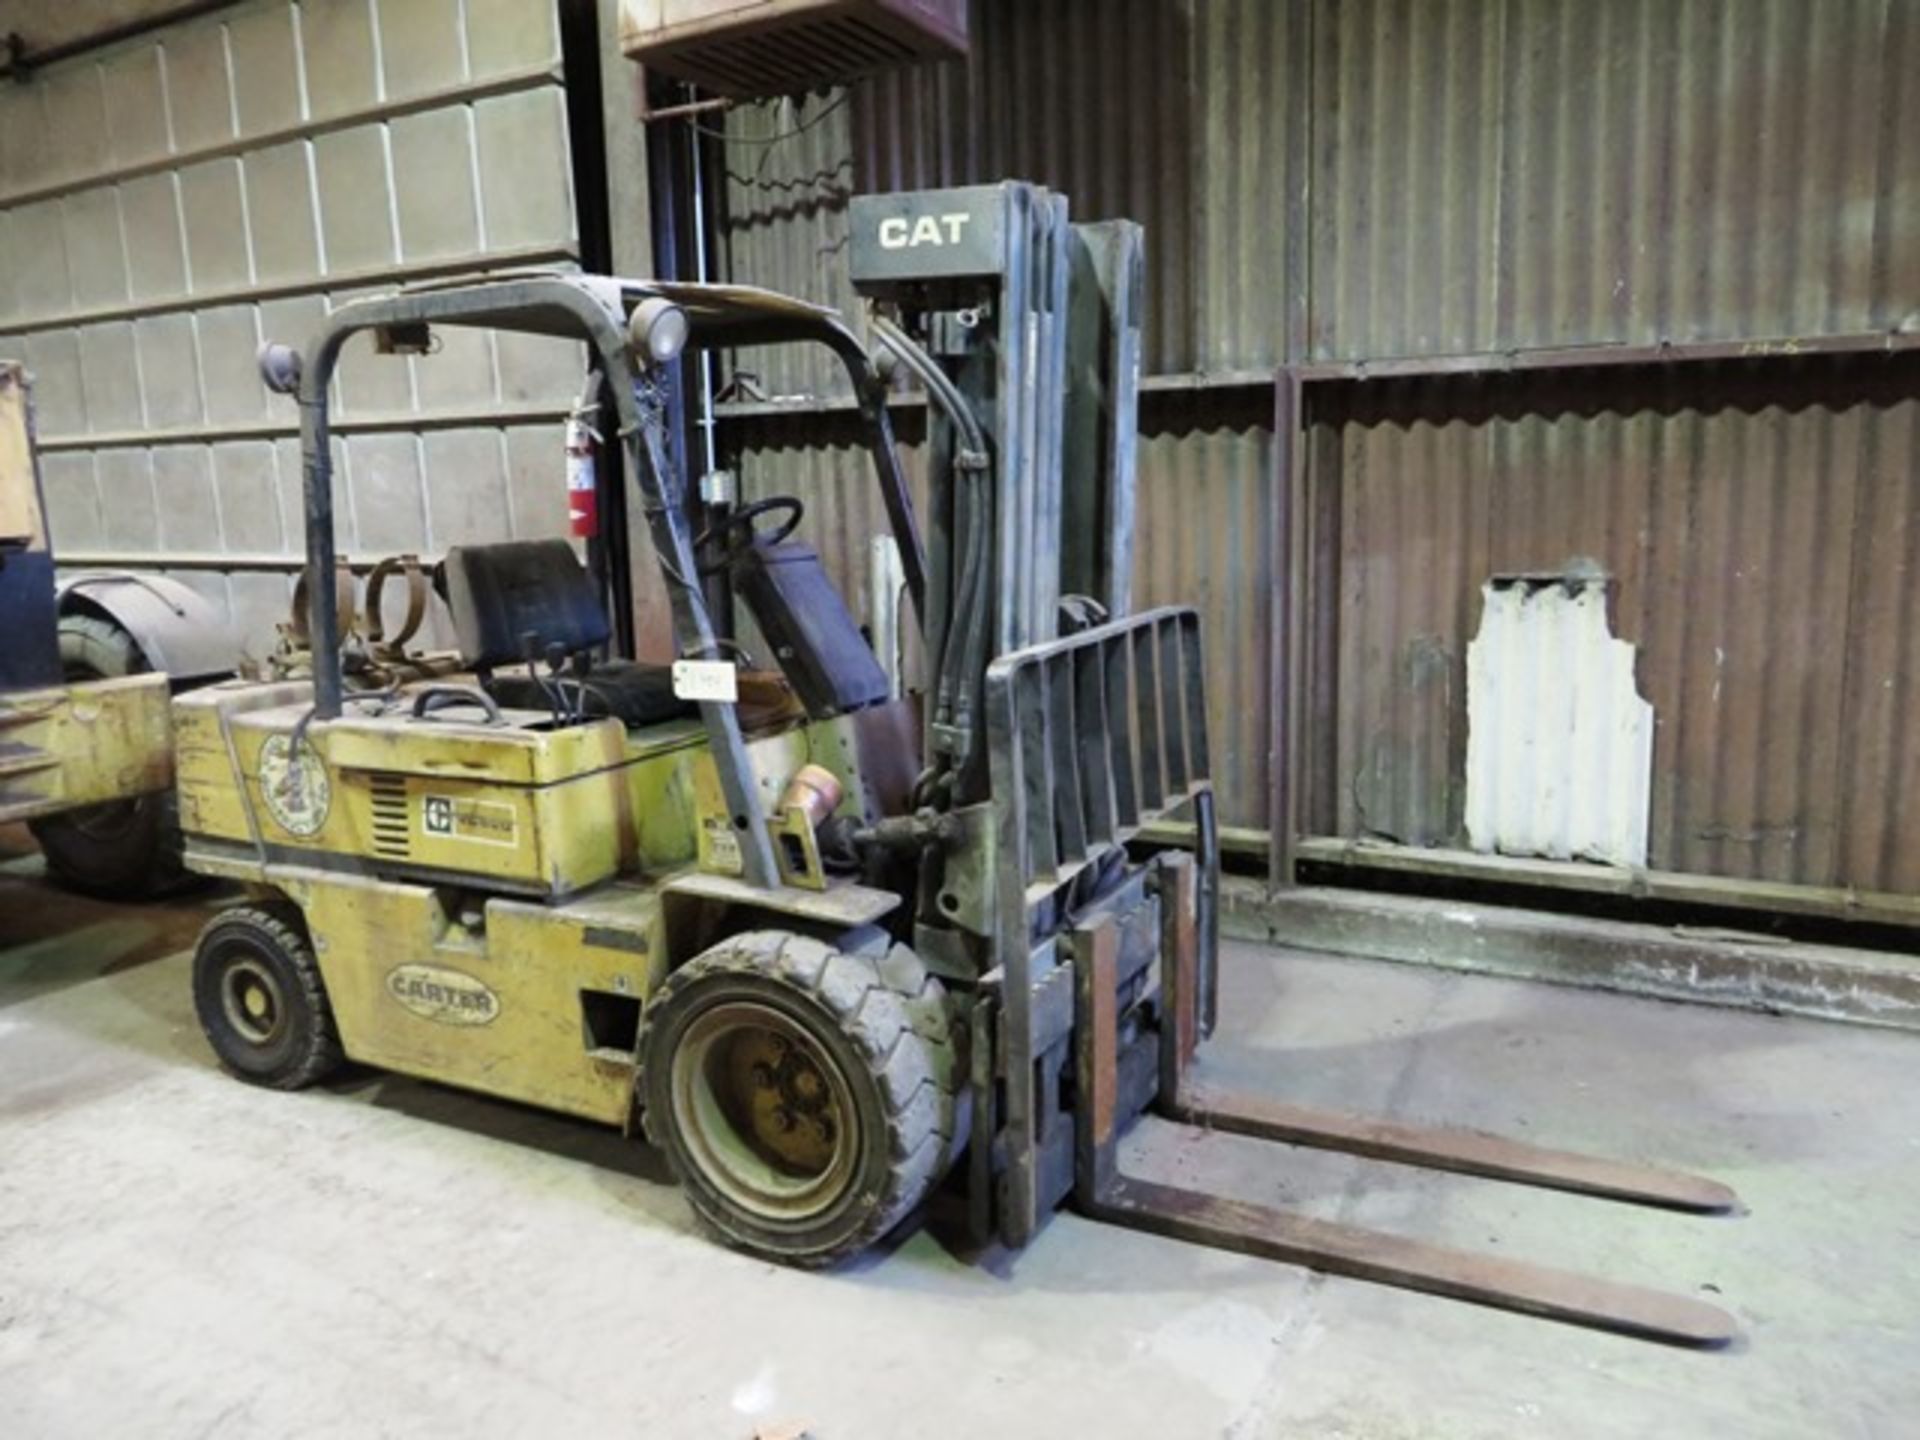 CAT VC600 6,000lb Propane Forklift